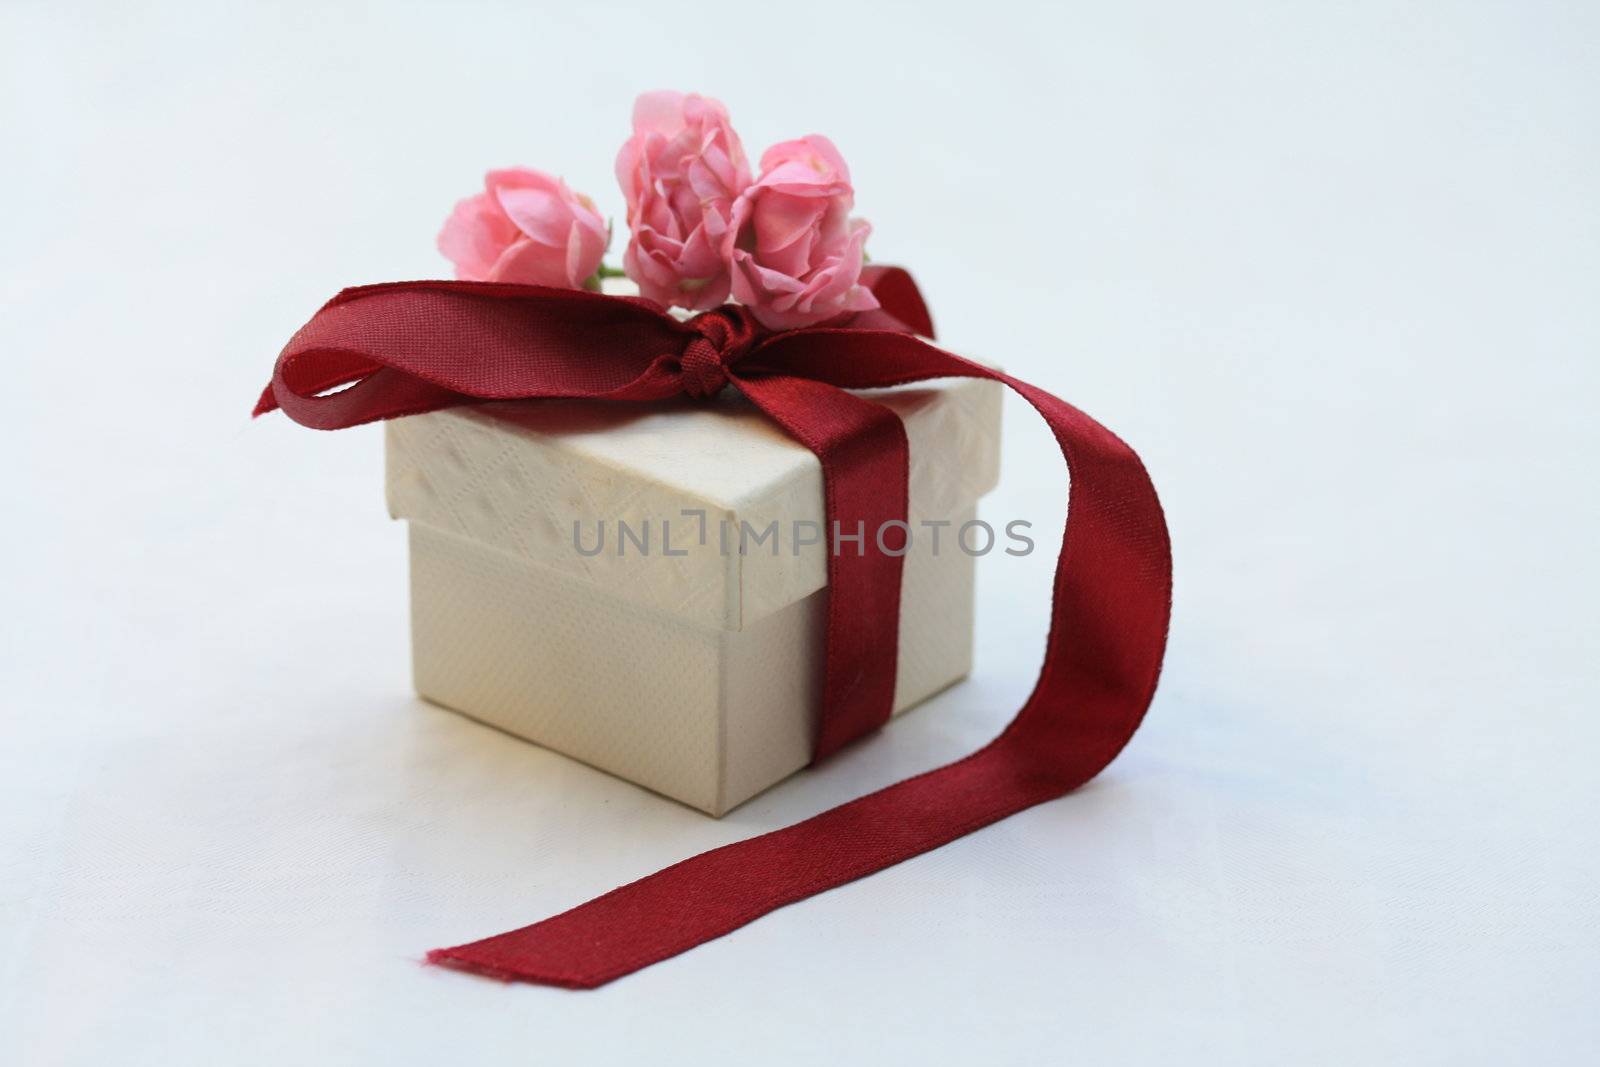 ring box with ribbon and roses